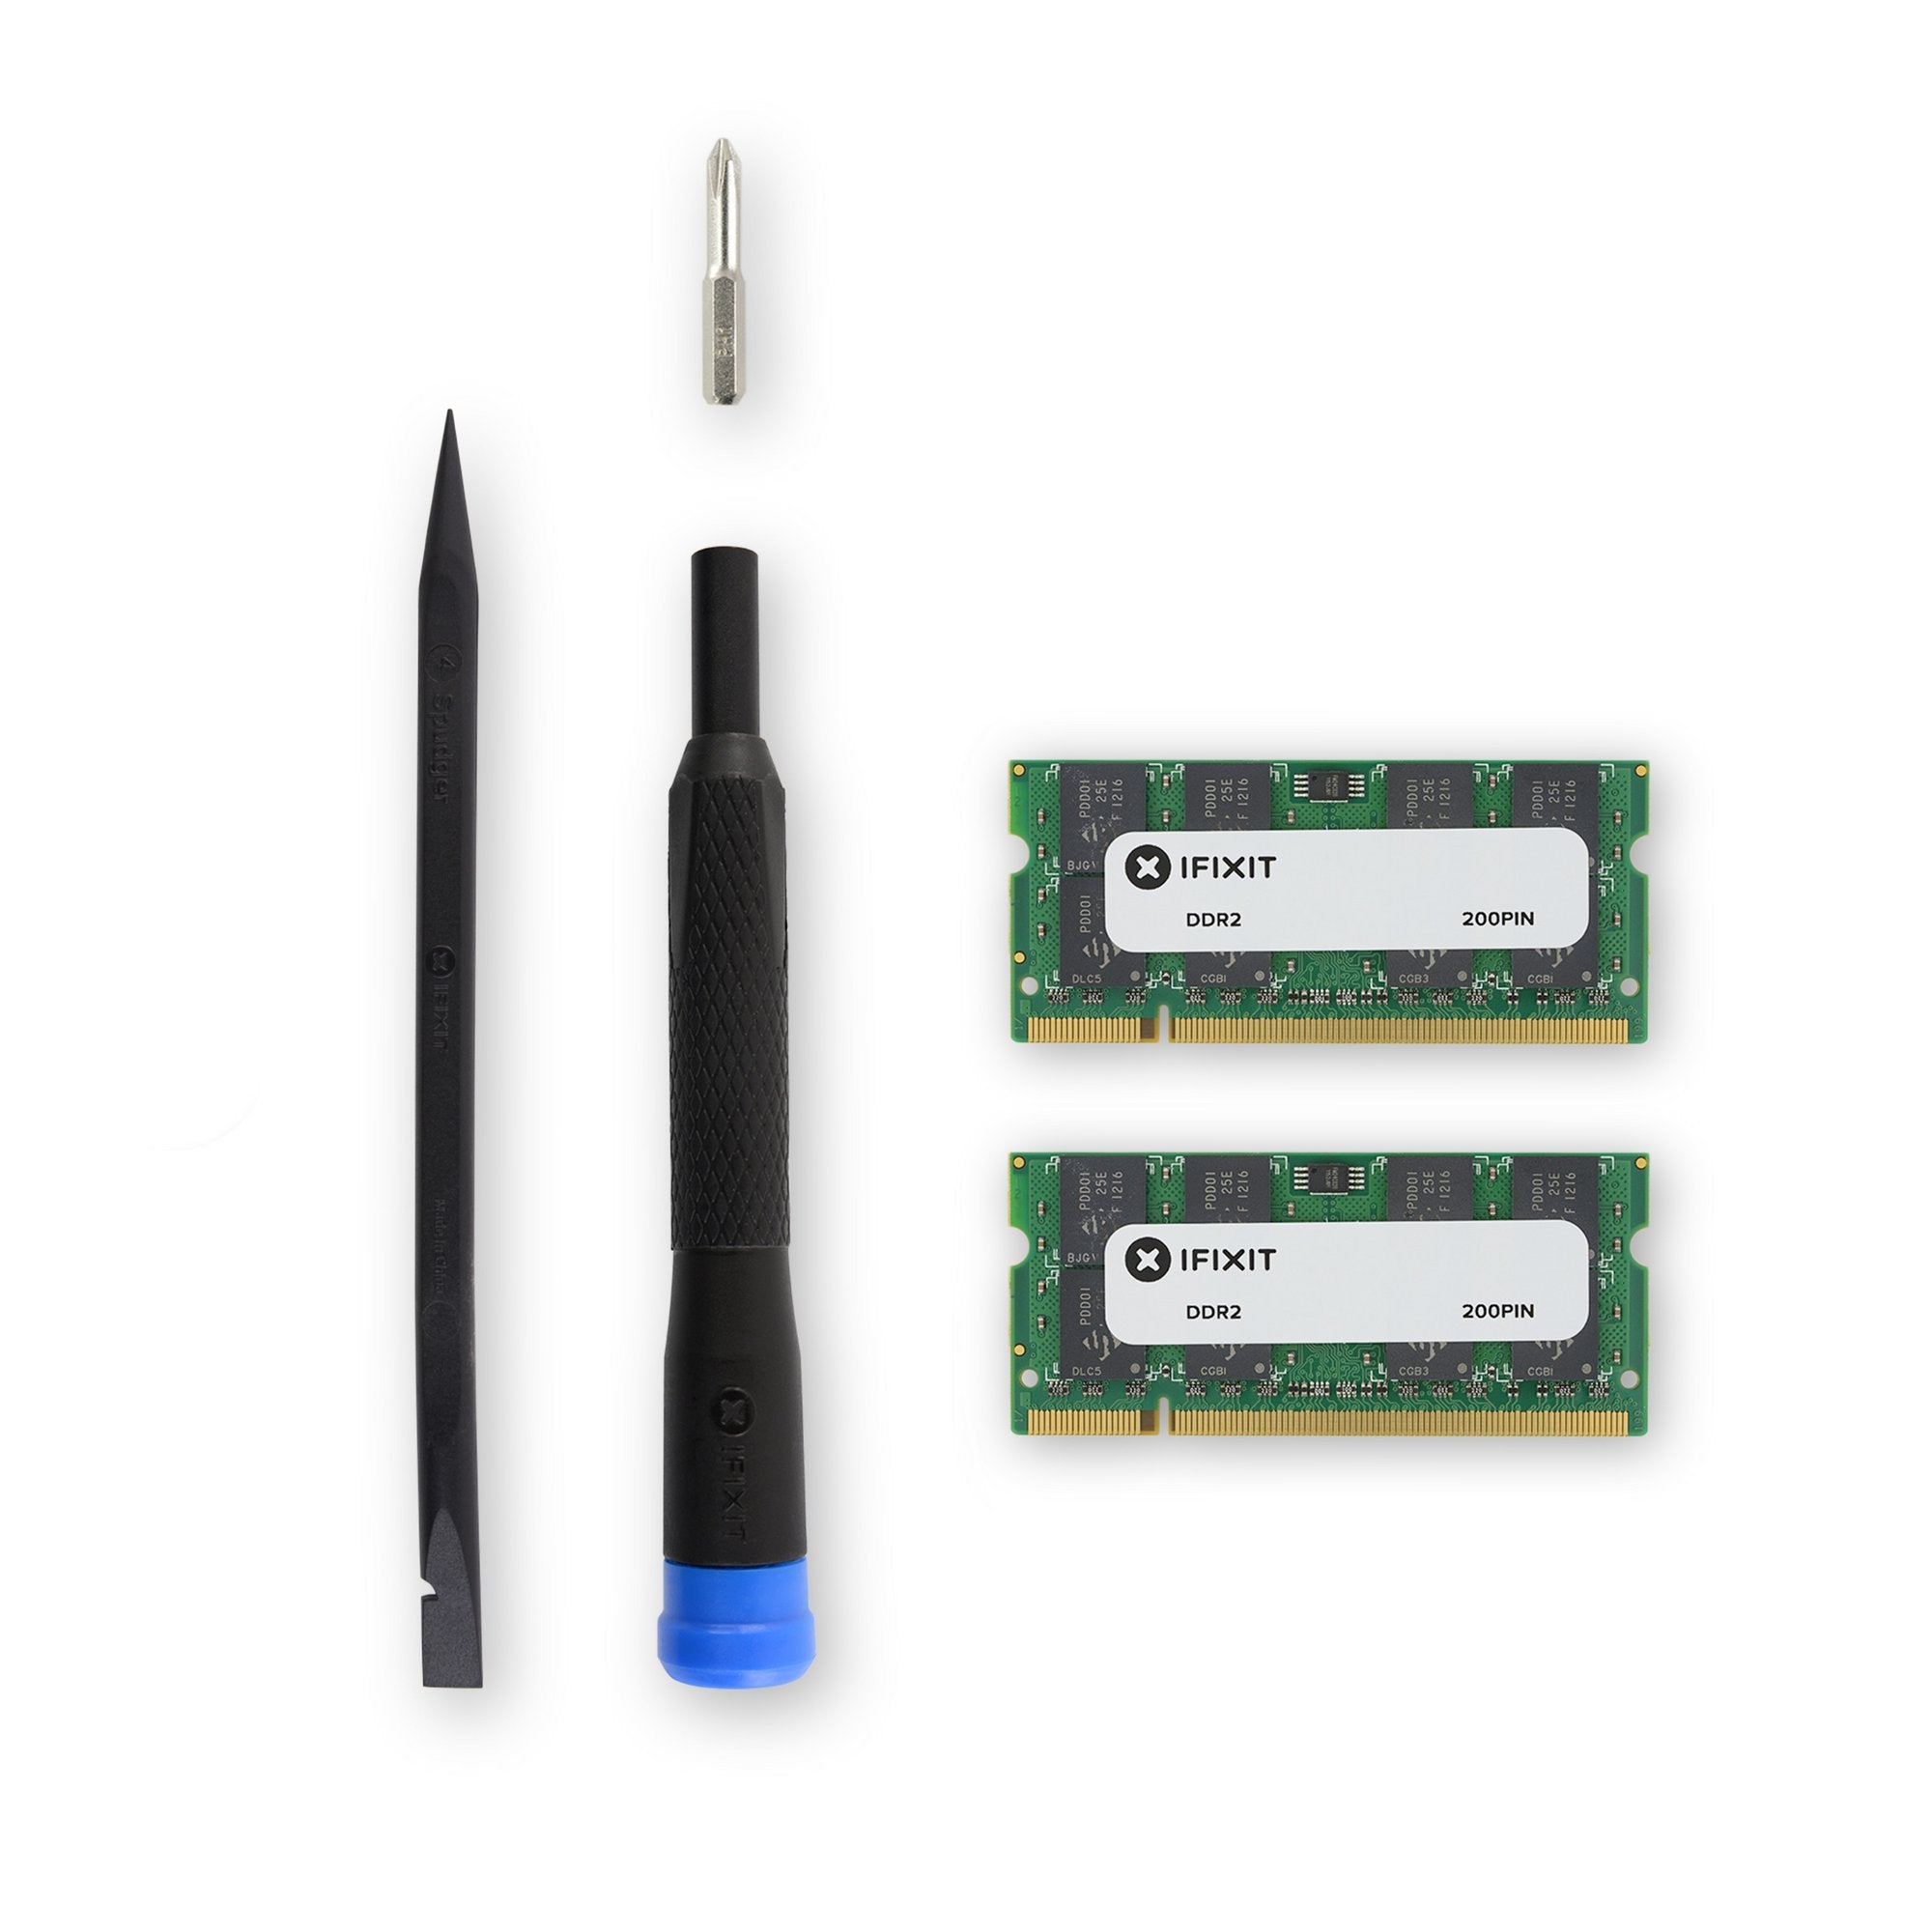 iMac Intel 17" EMC 2104 (Early 2006) Memory Maxxer RAM Upgrade Kit